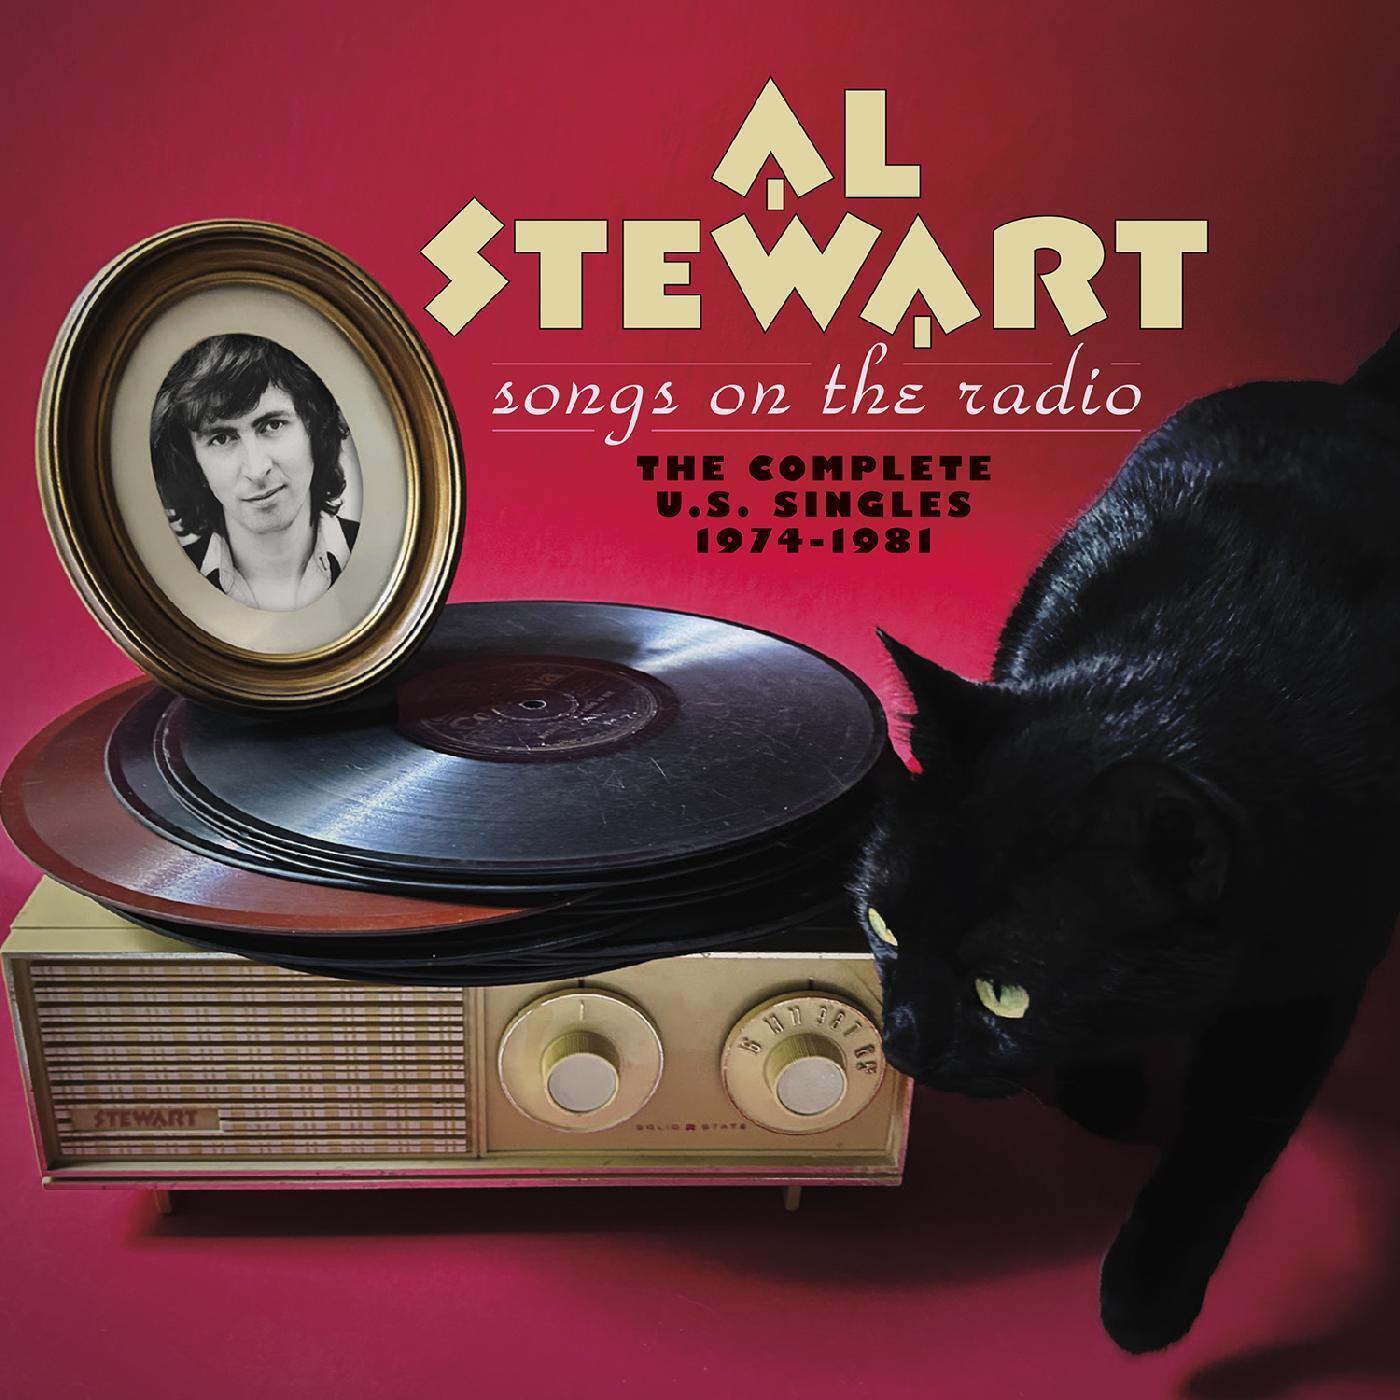 Al Stewart Songs on the Radio--The Complete U.S. Singles 1974-1981 Music CDs New